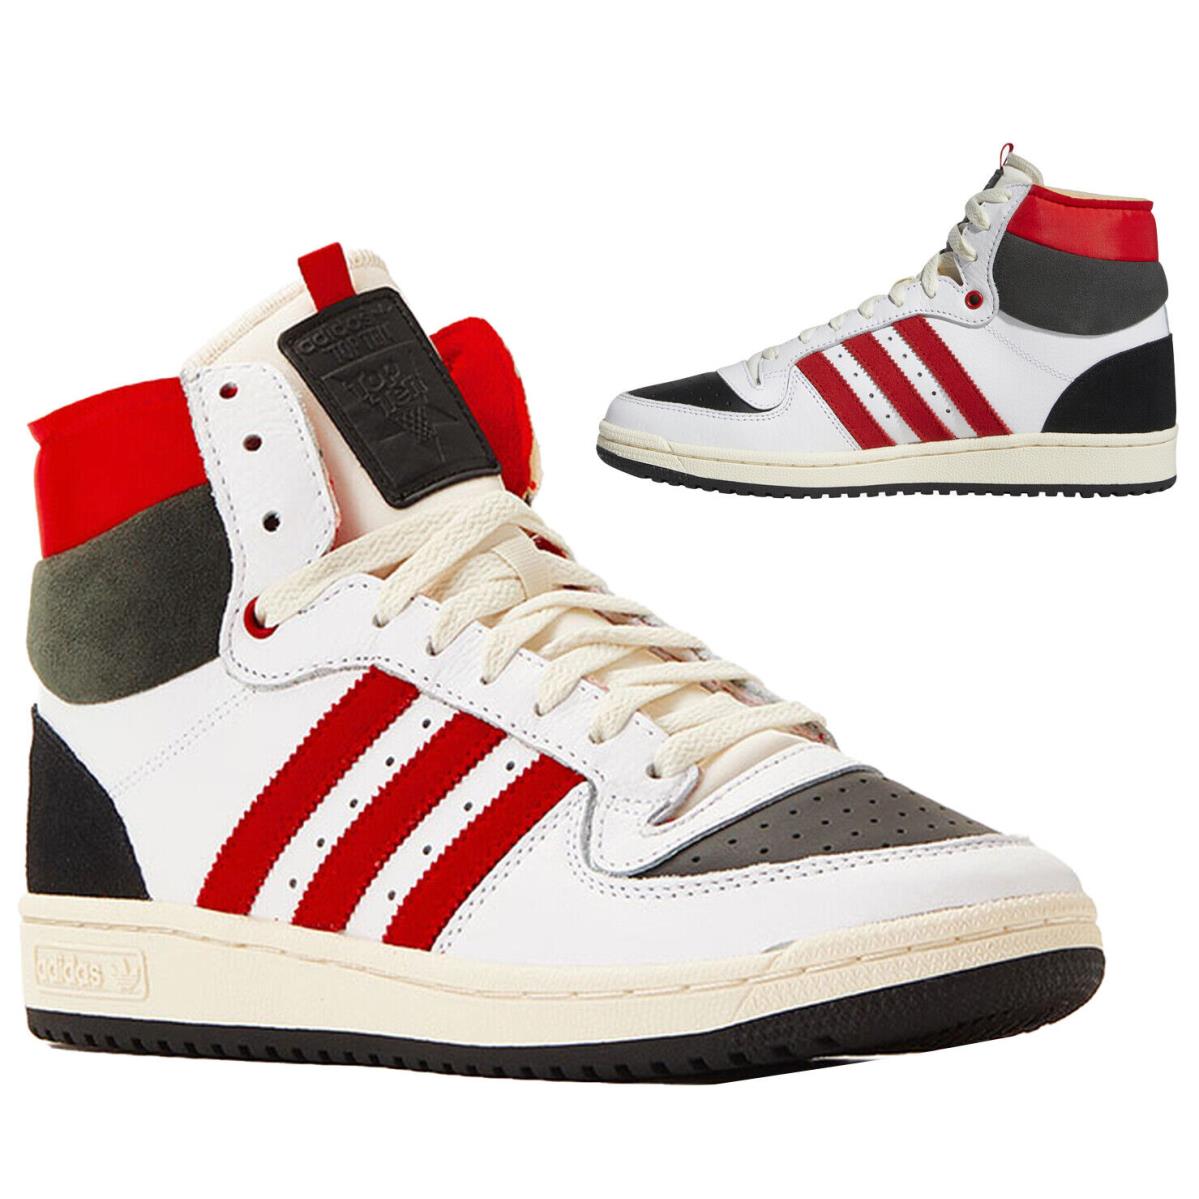 Adidas Originals Top Ten Mens Leather Hi Top Athletic Sneaker Red All Szes